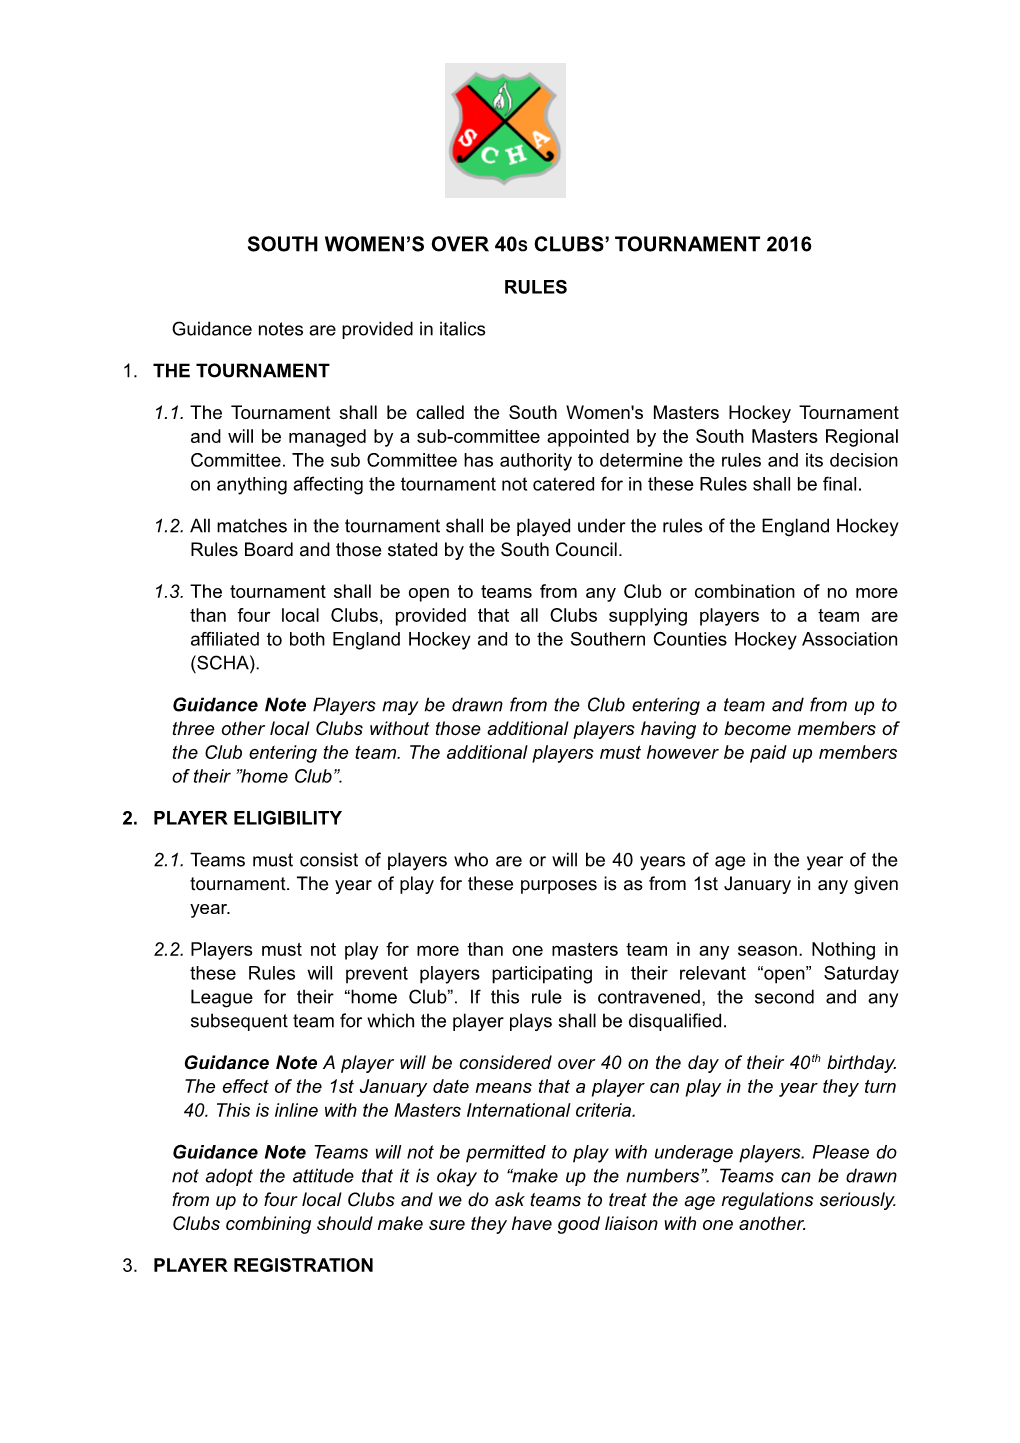 South Clubs' League Regulations